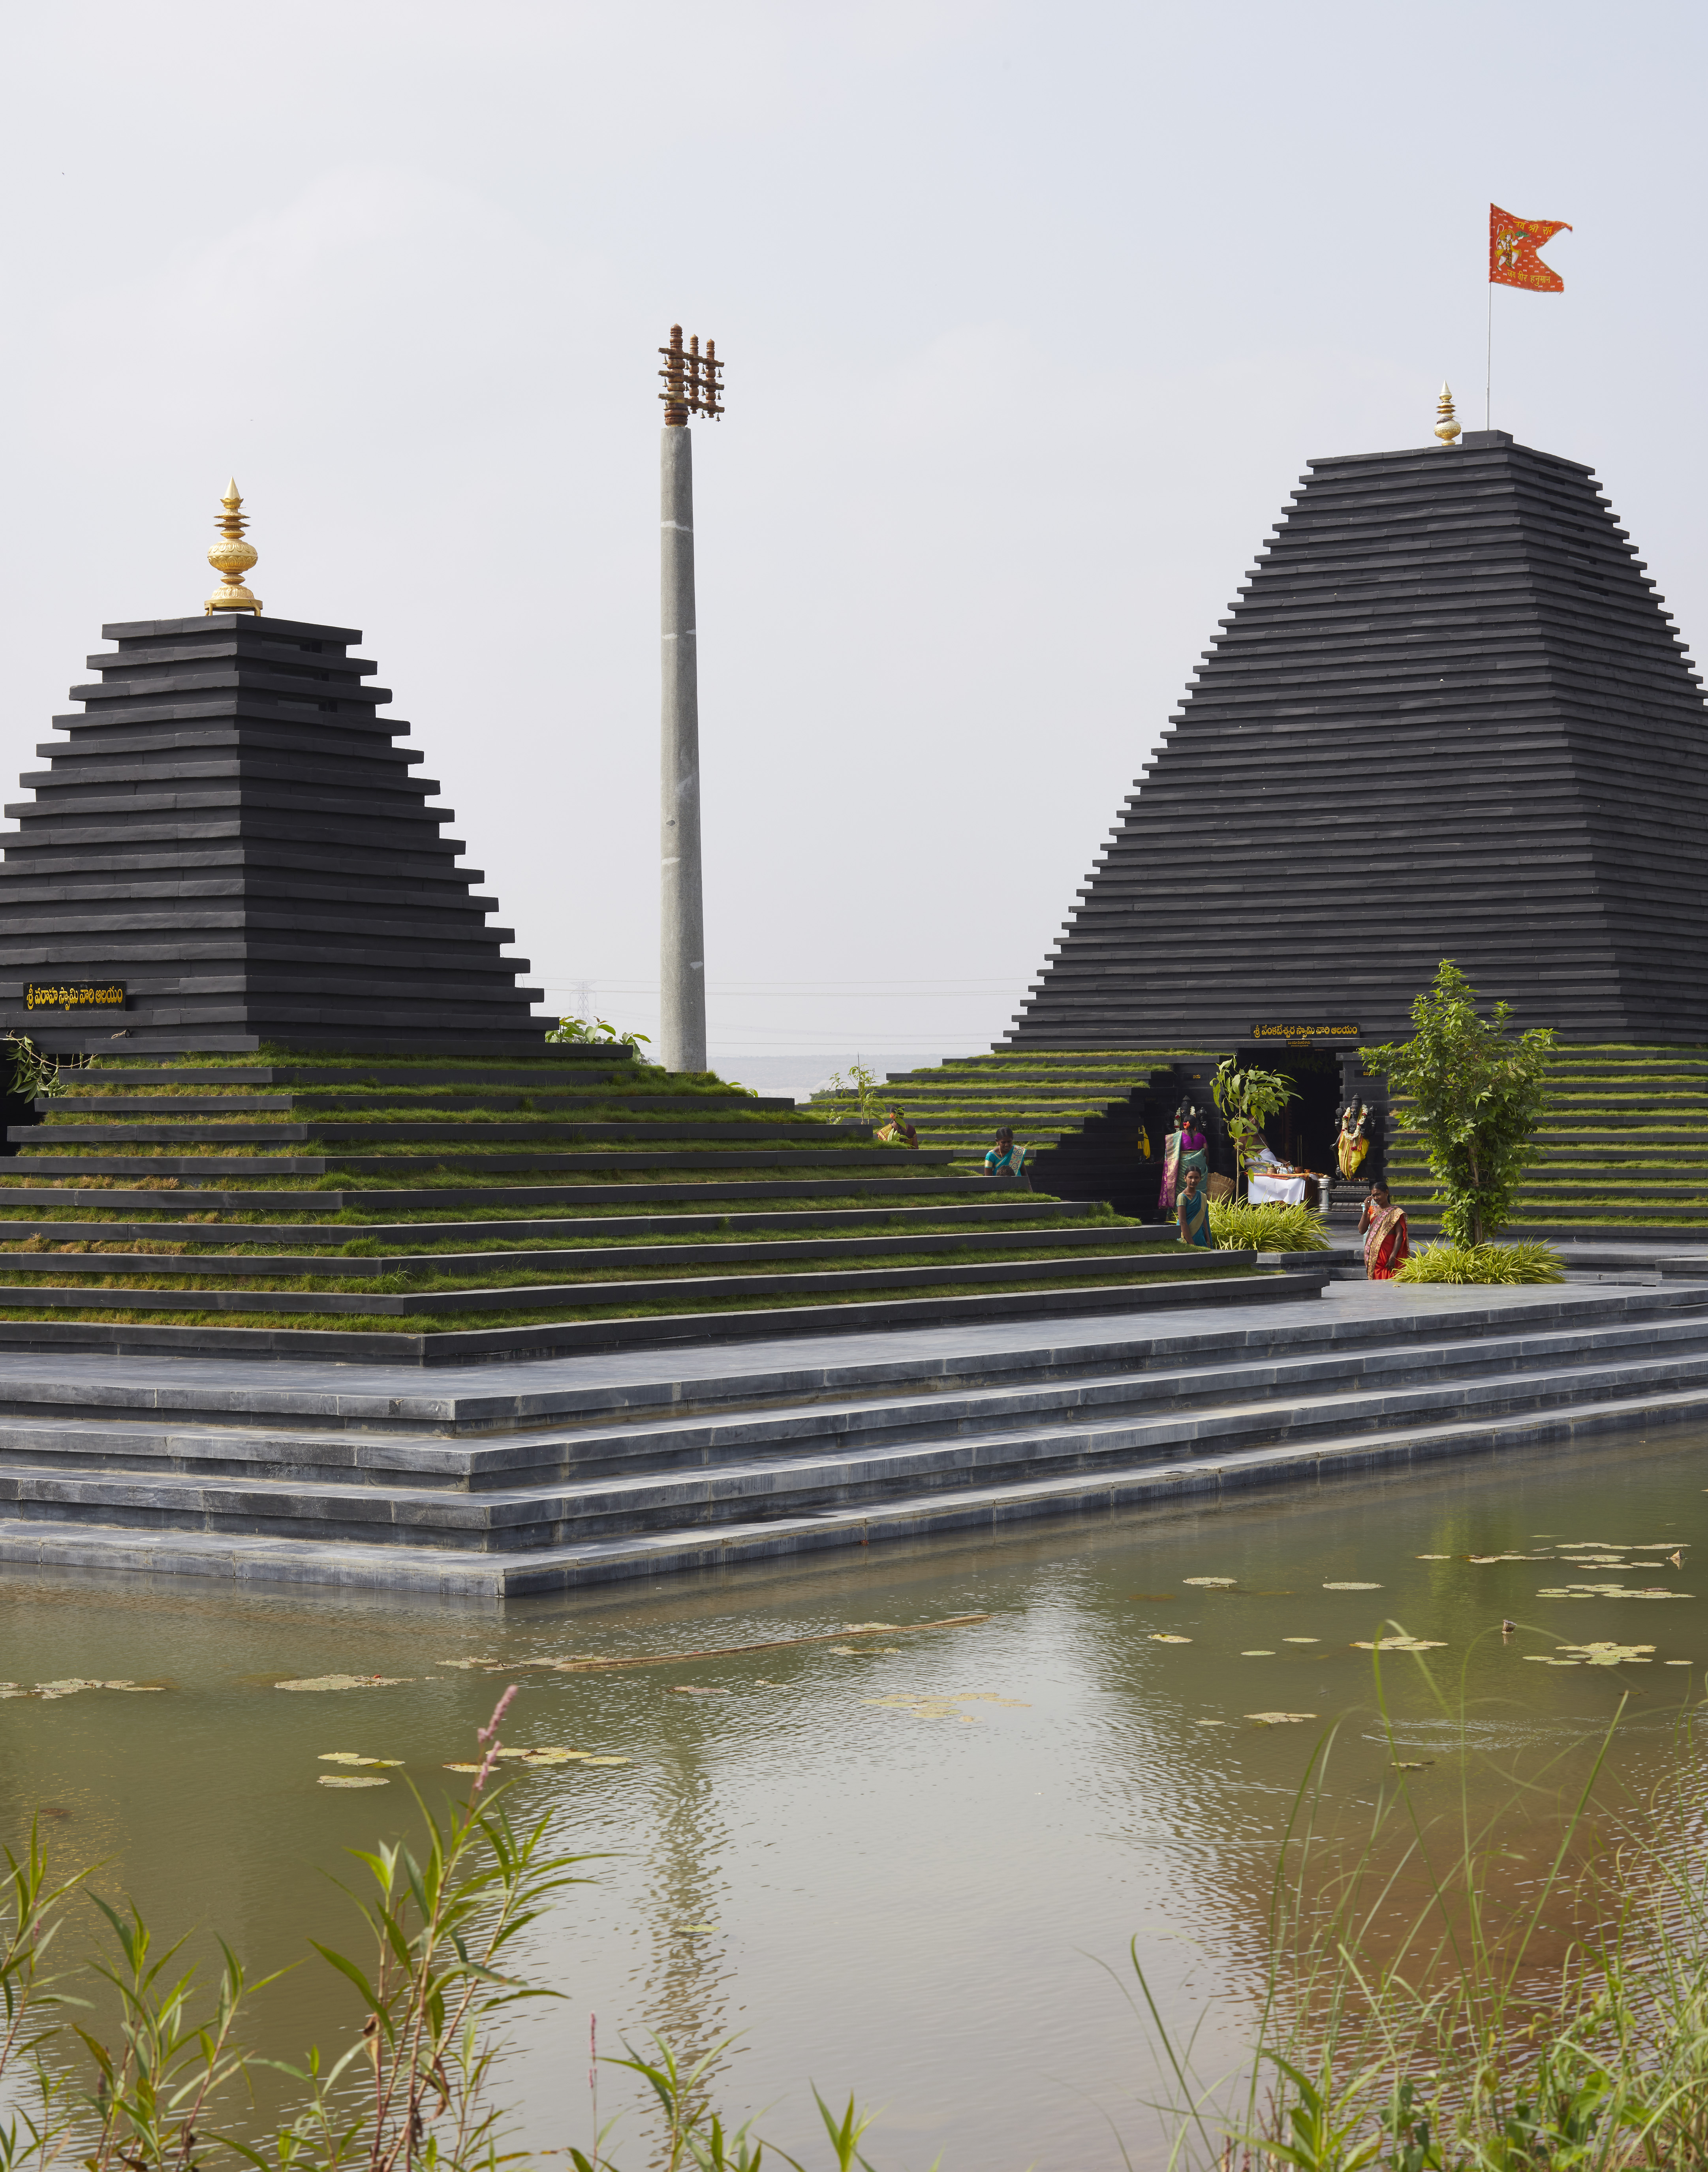 JSW Cement dedicates new Balaji temple to the community of Nandyal